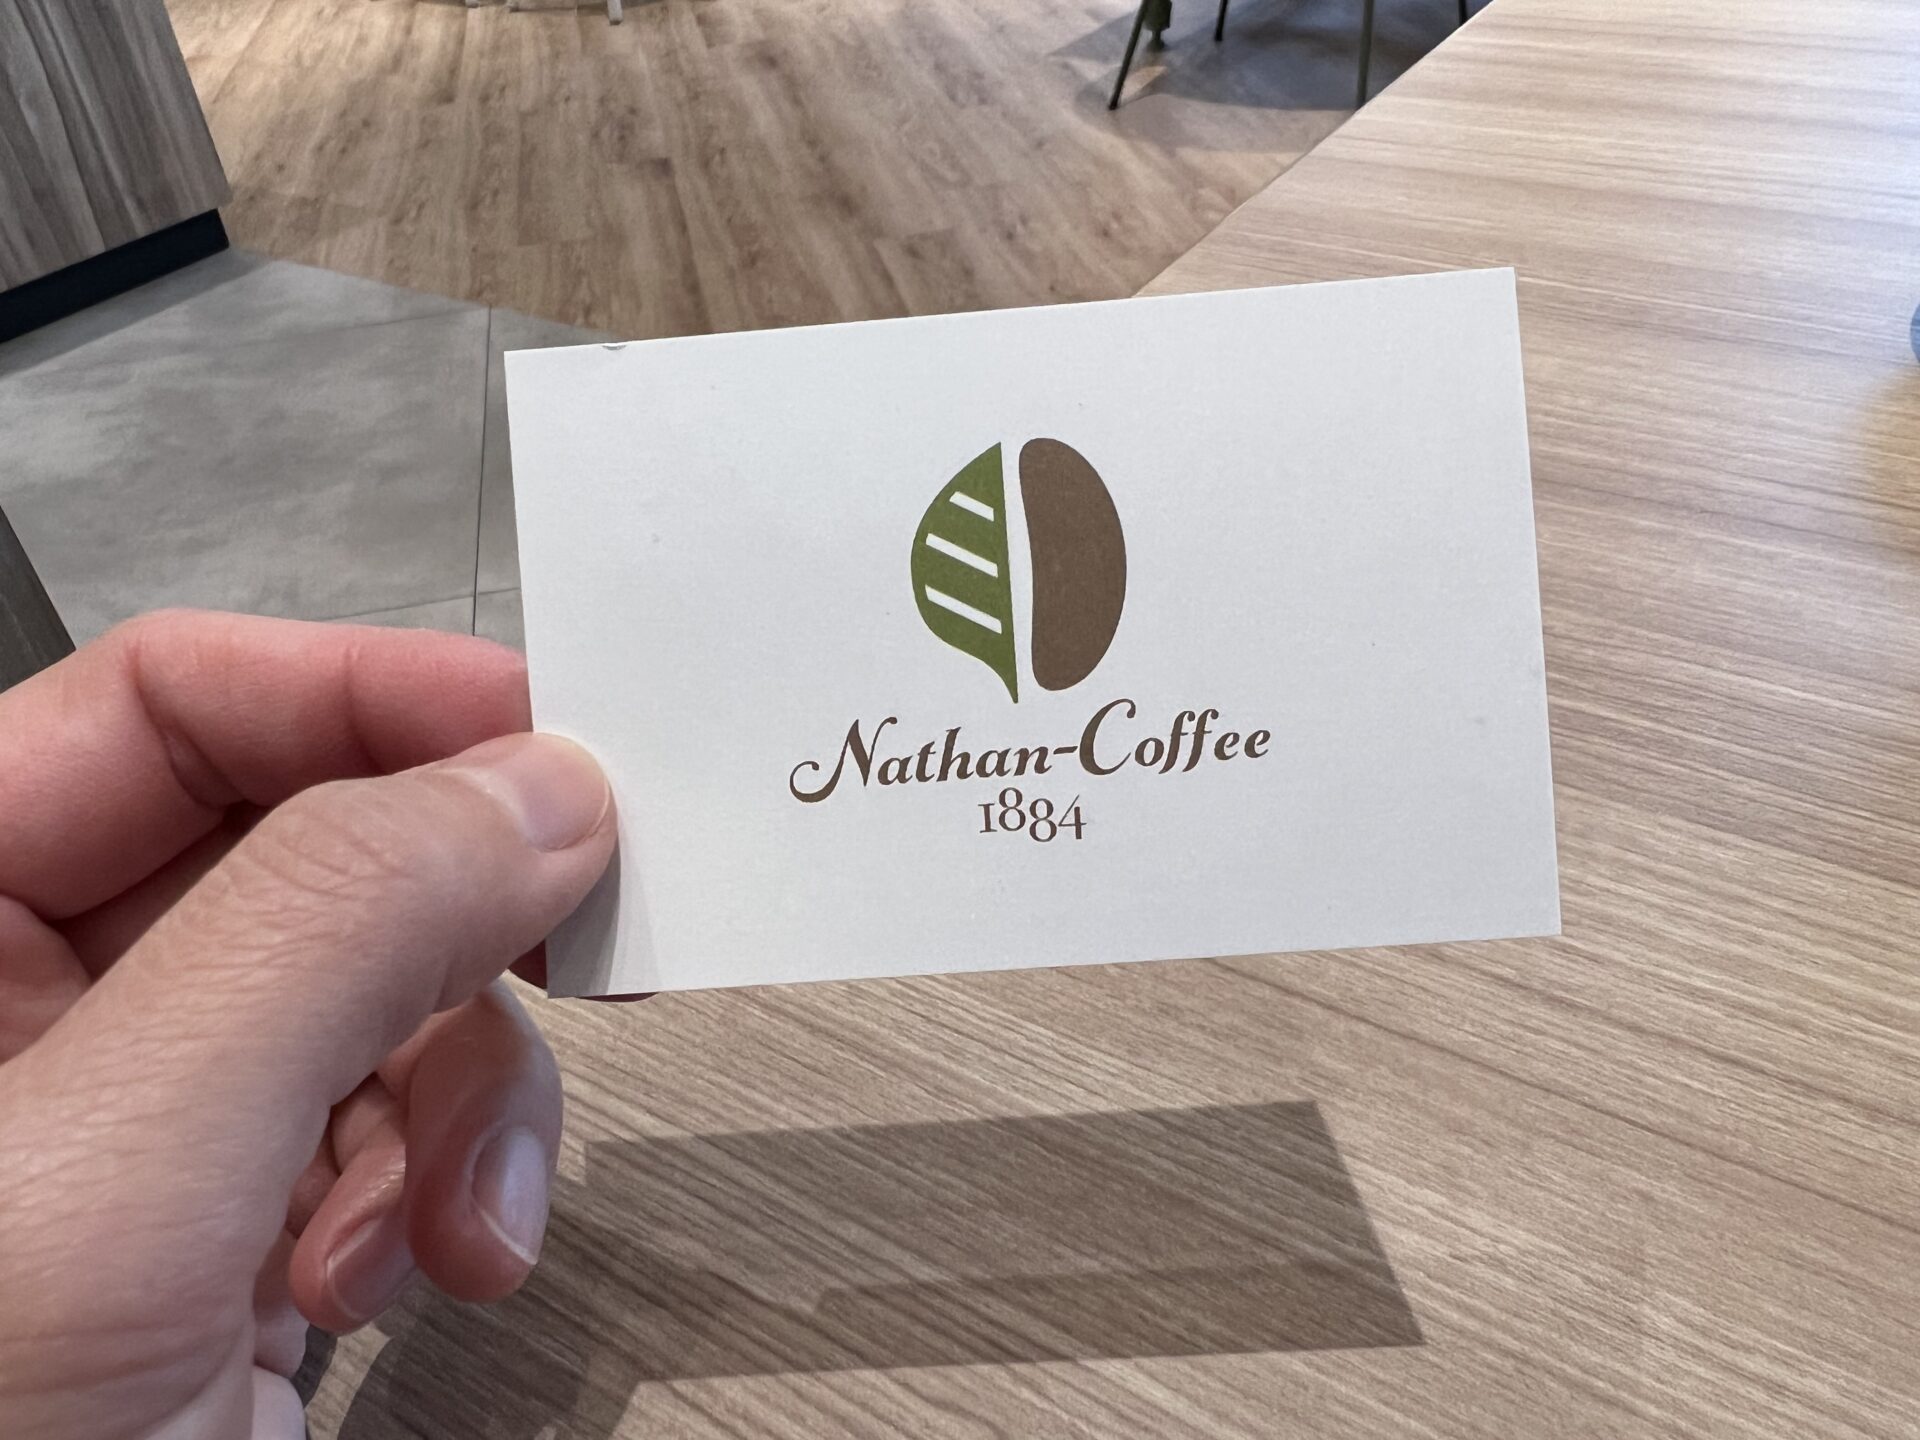 Nathan-coffe1884 ポイントカード